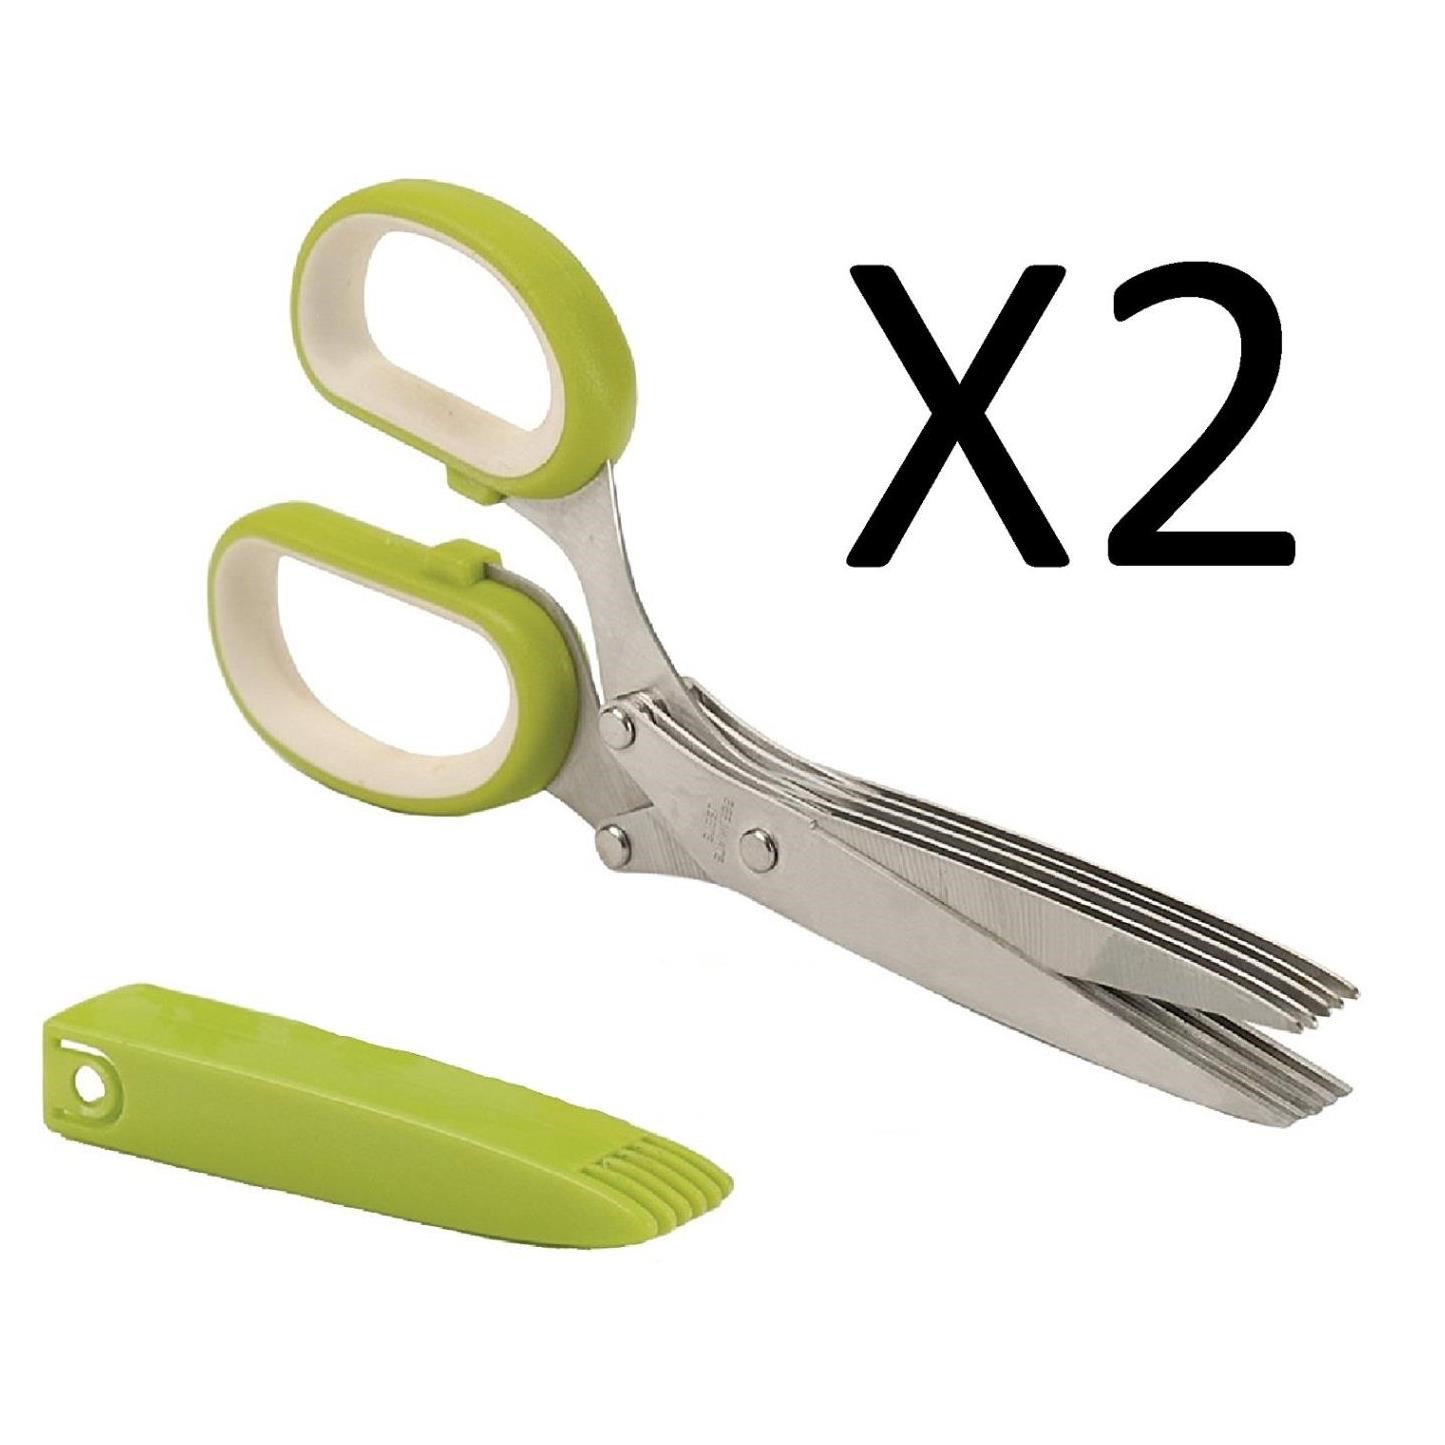 20 I Cut My Hair With Rusty Kitchen Scissors Amazon RSVP Herb Scissors Cutlery Shears Kitchen Dining I,Cut,My,Hair,Rusty,Kitchen,Scissors